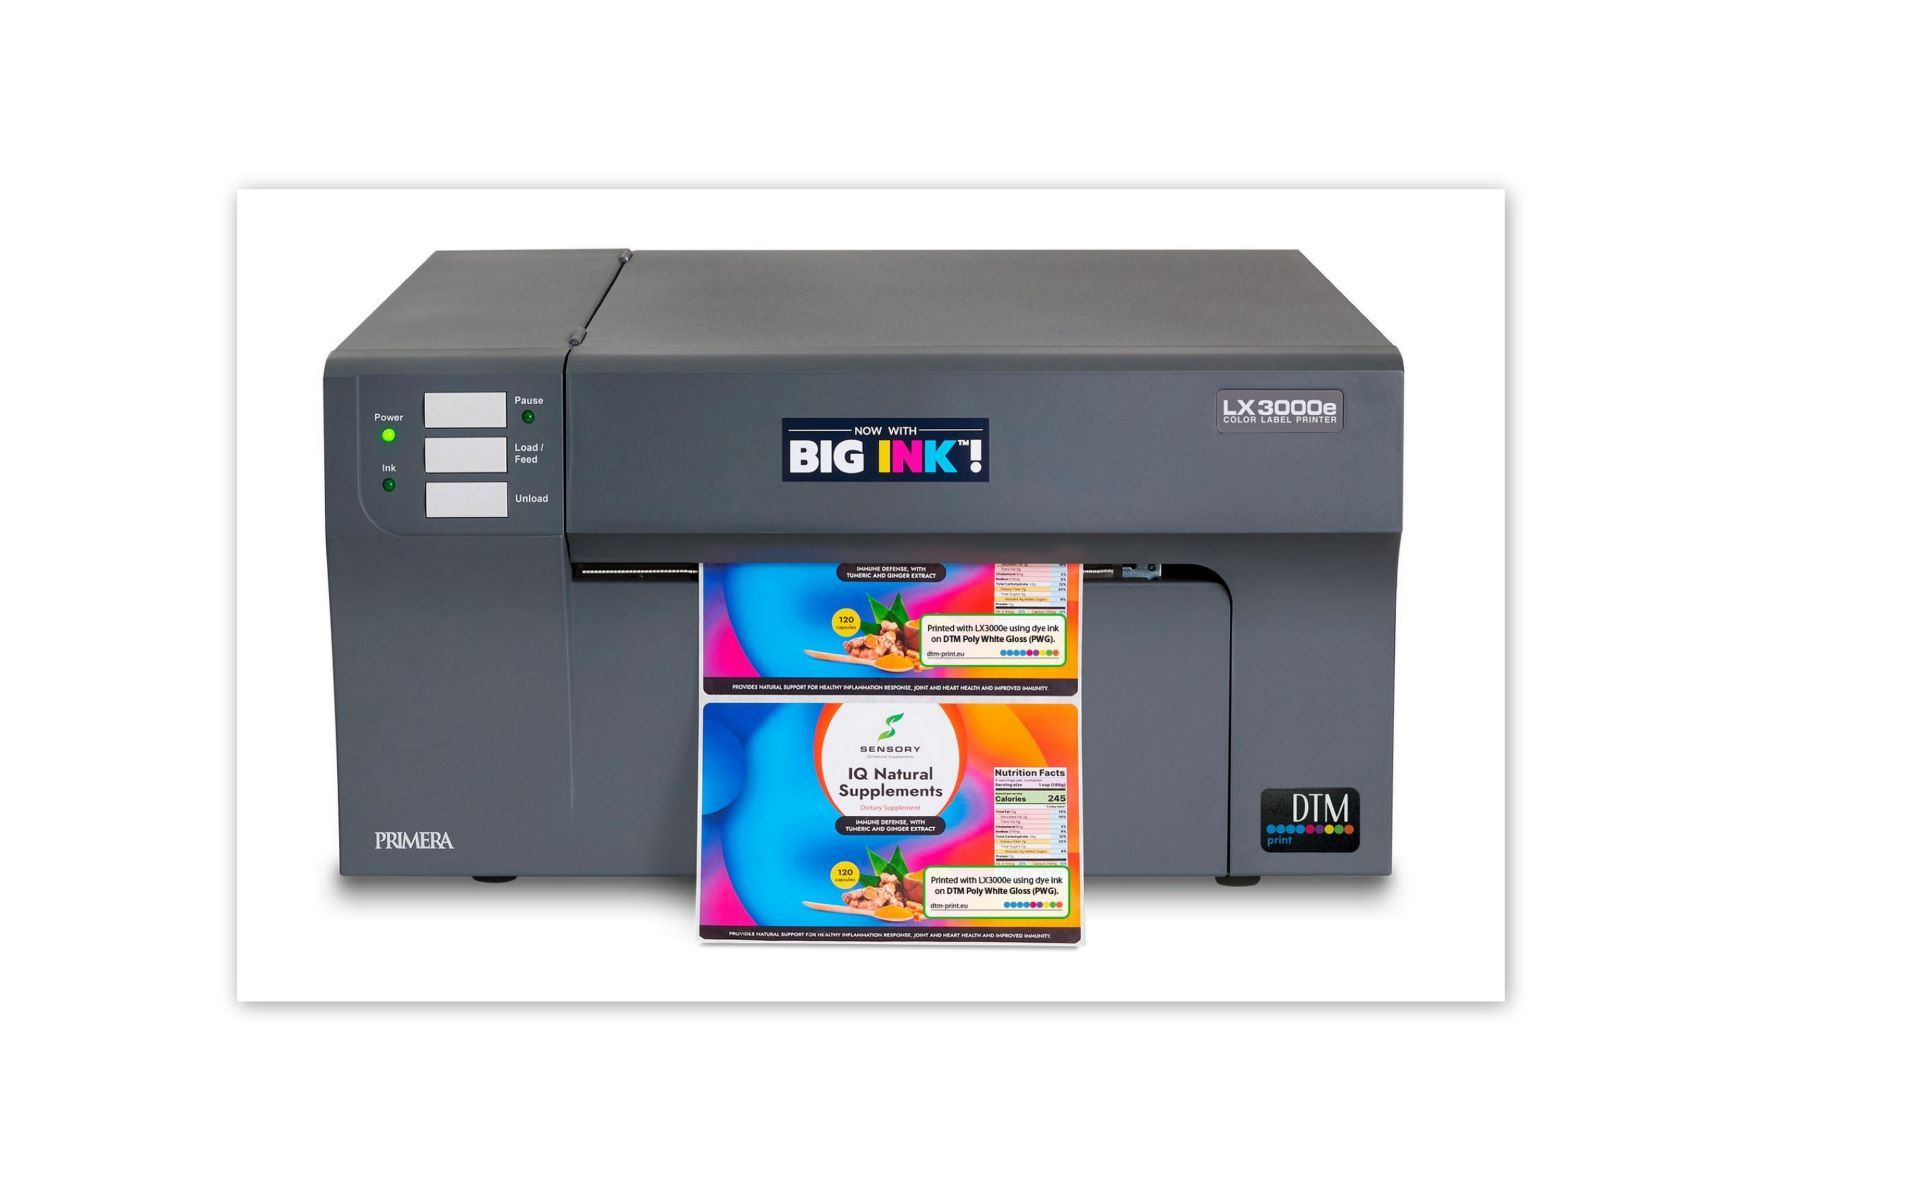 drei Printer Pigment-basierte Tintentanks(CMY) Color separaten Label mit Vollfarb-Drucktechnologie DTM LX3000e PRINT Pigment Printer Netzwerkfähig Label Inkjet WLAN